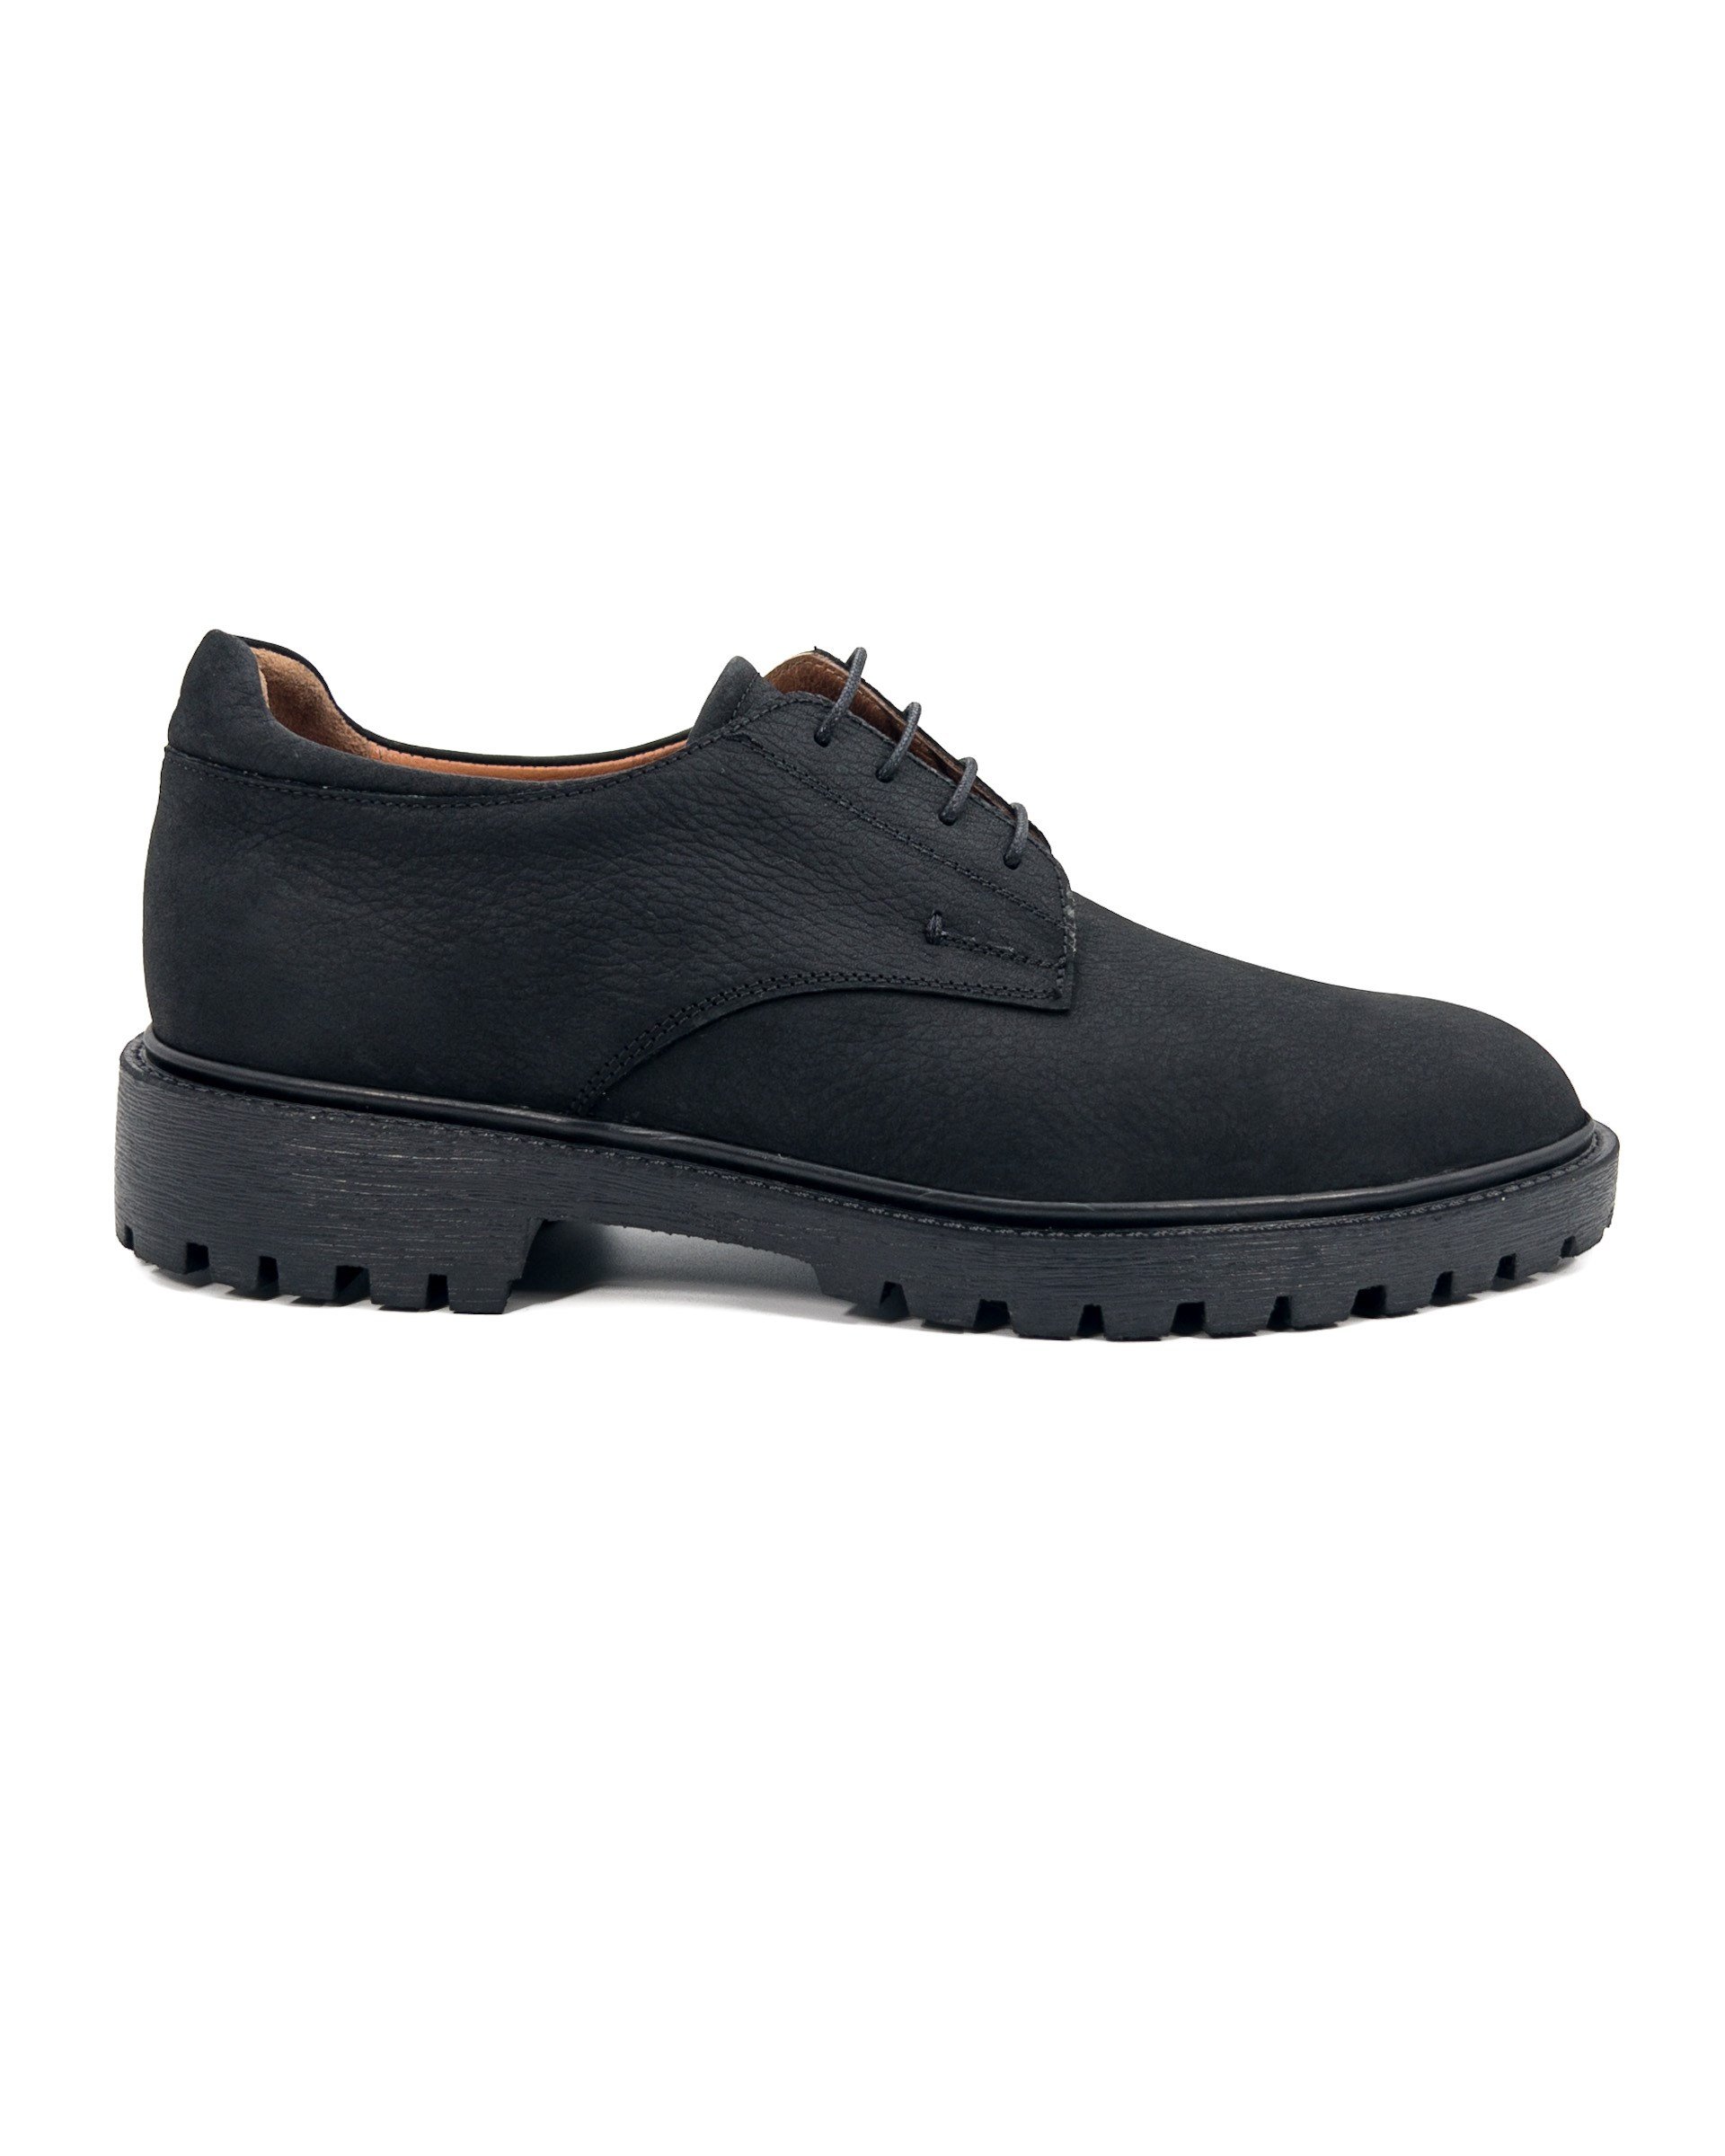 Assos Black Genuine Nubuck Leather Men's Casual Shoes | Tezcan